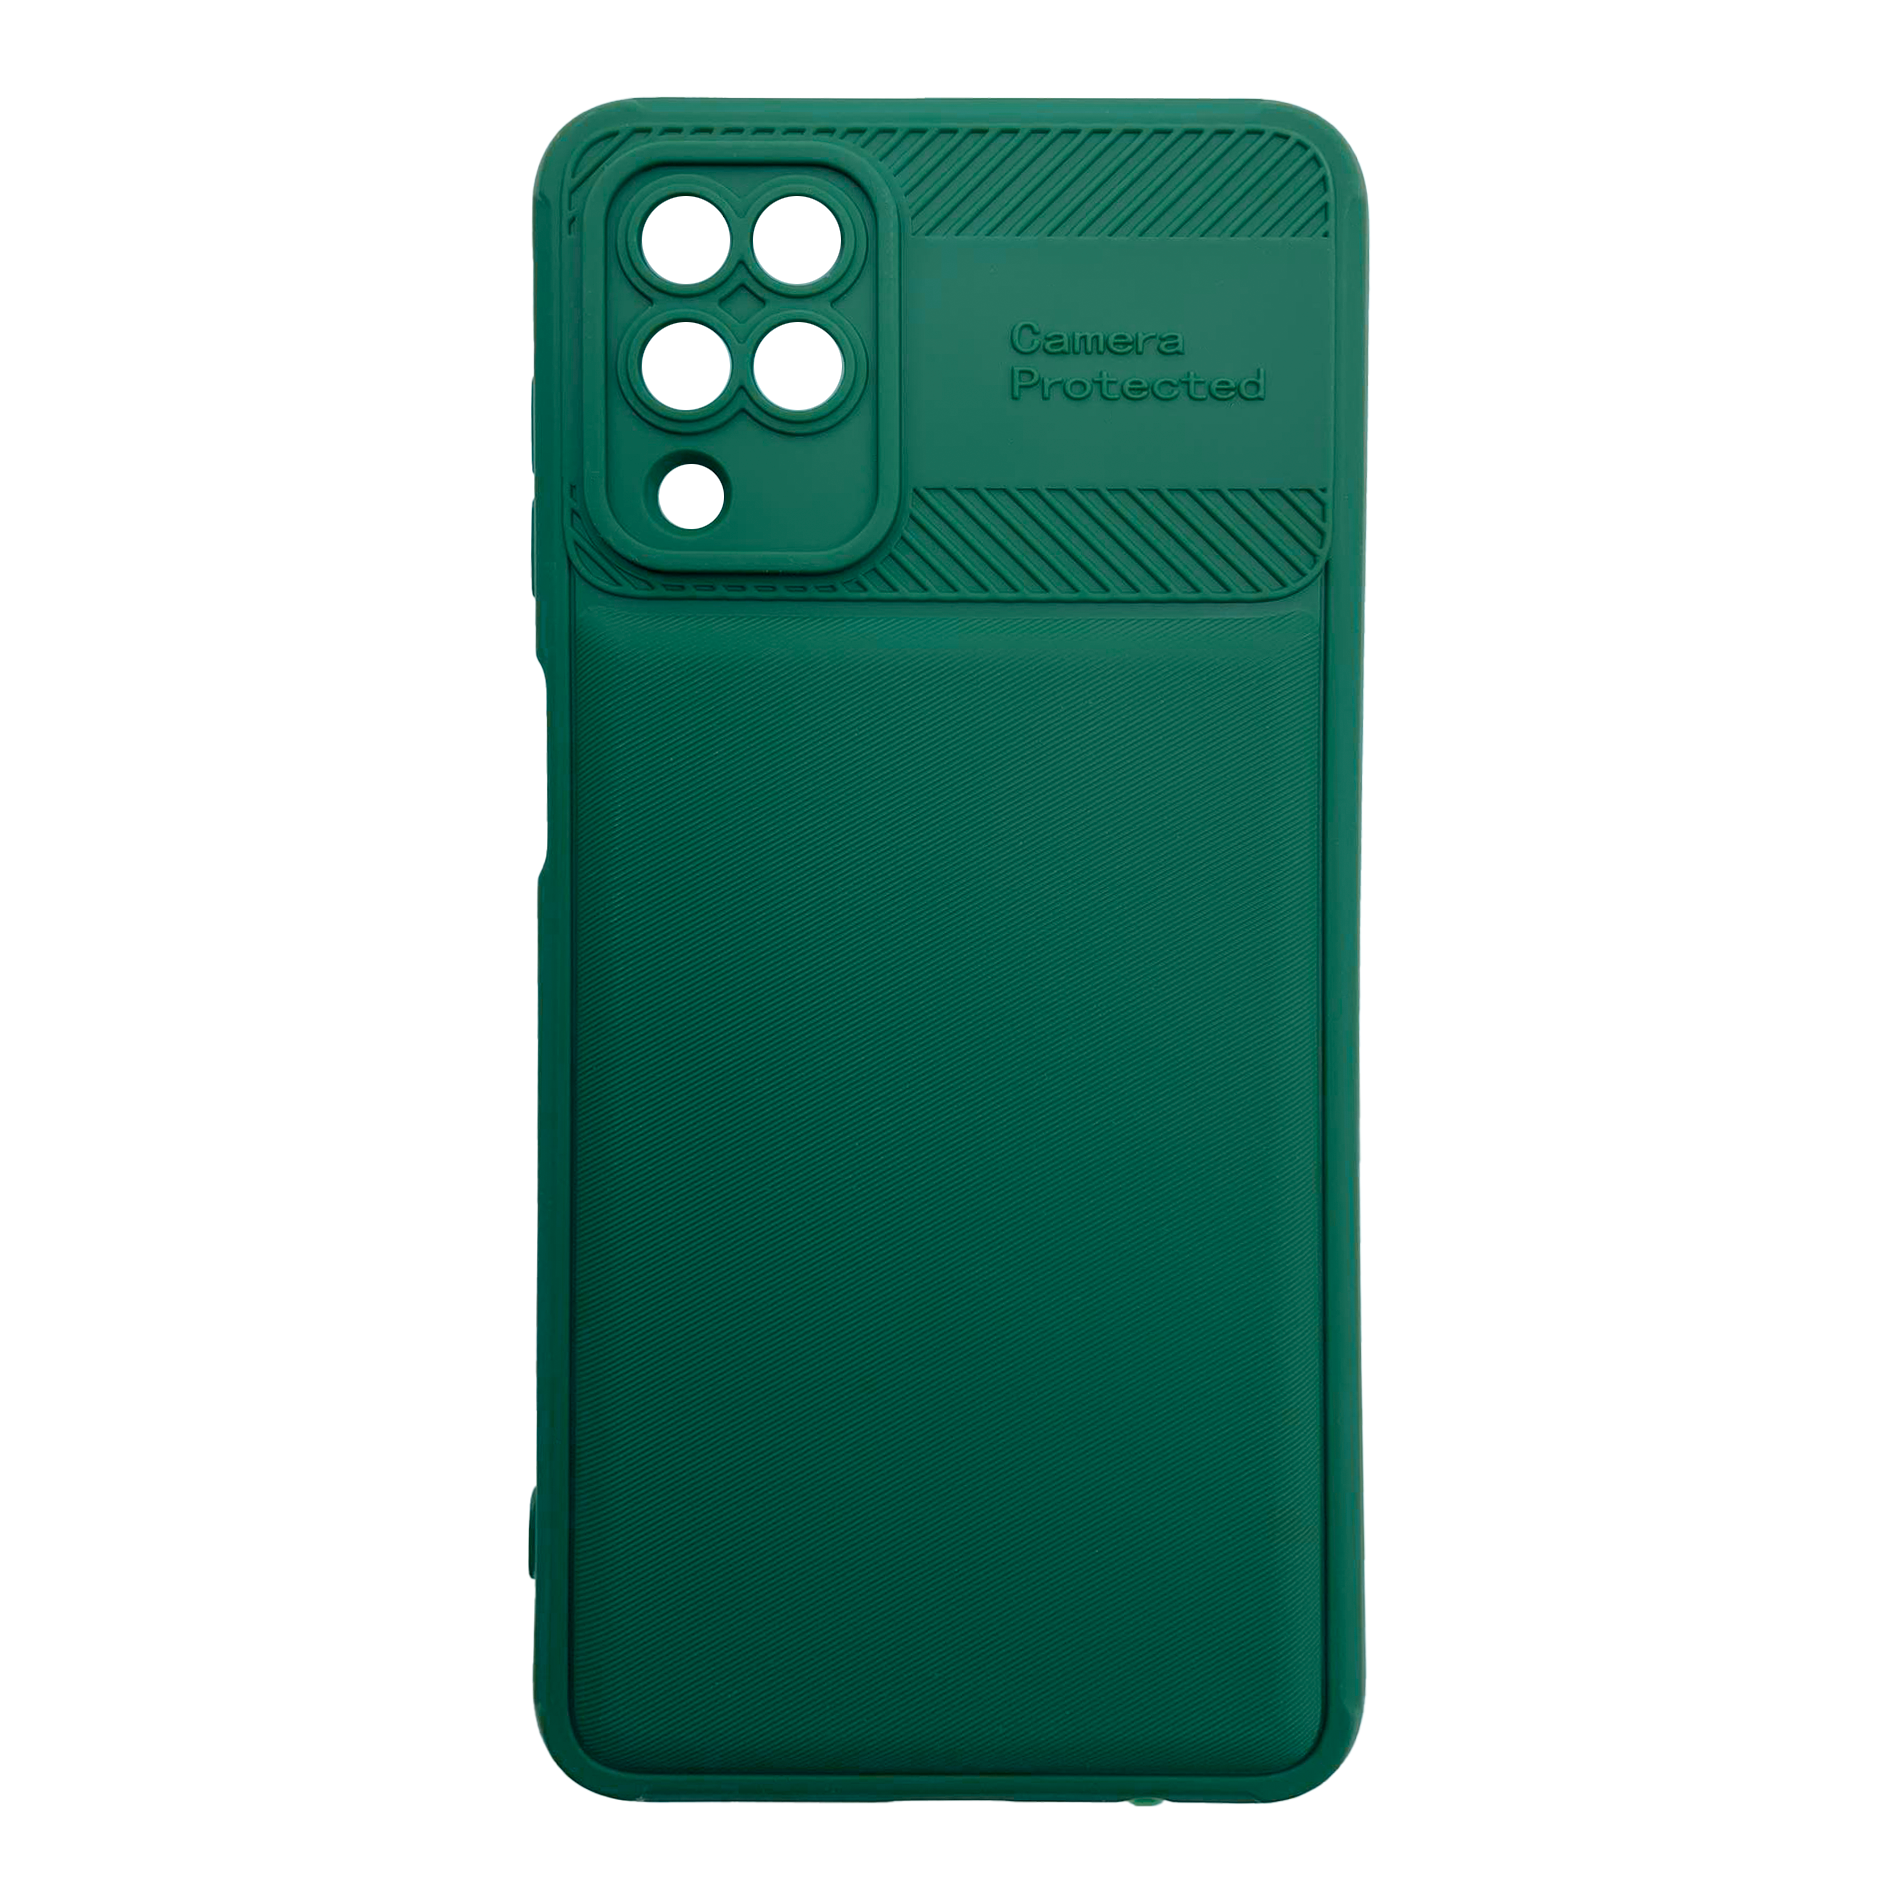 Samsung Galaxy A12 Protector tok zöld